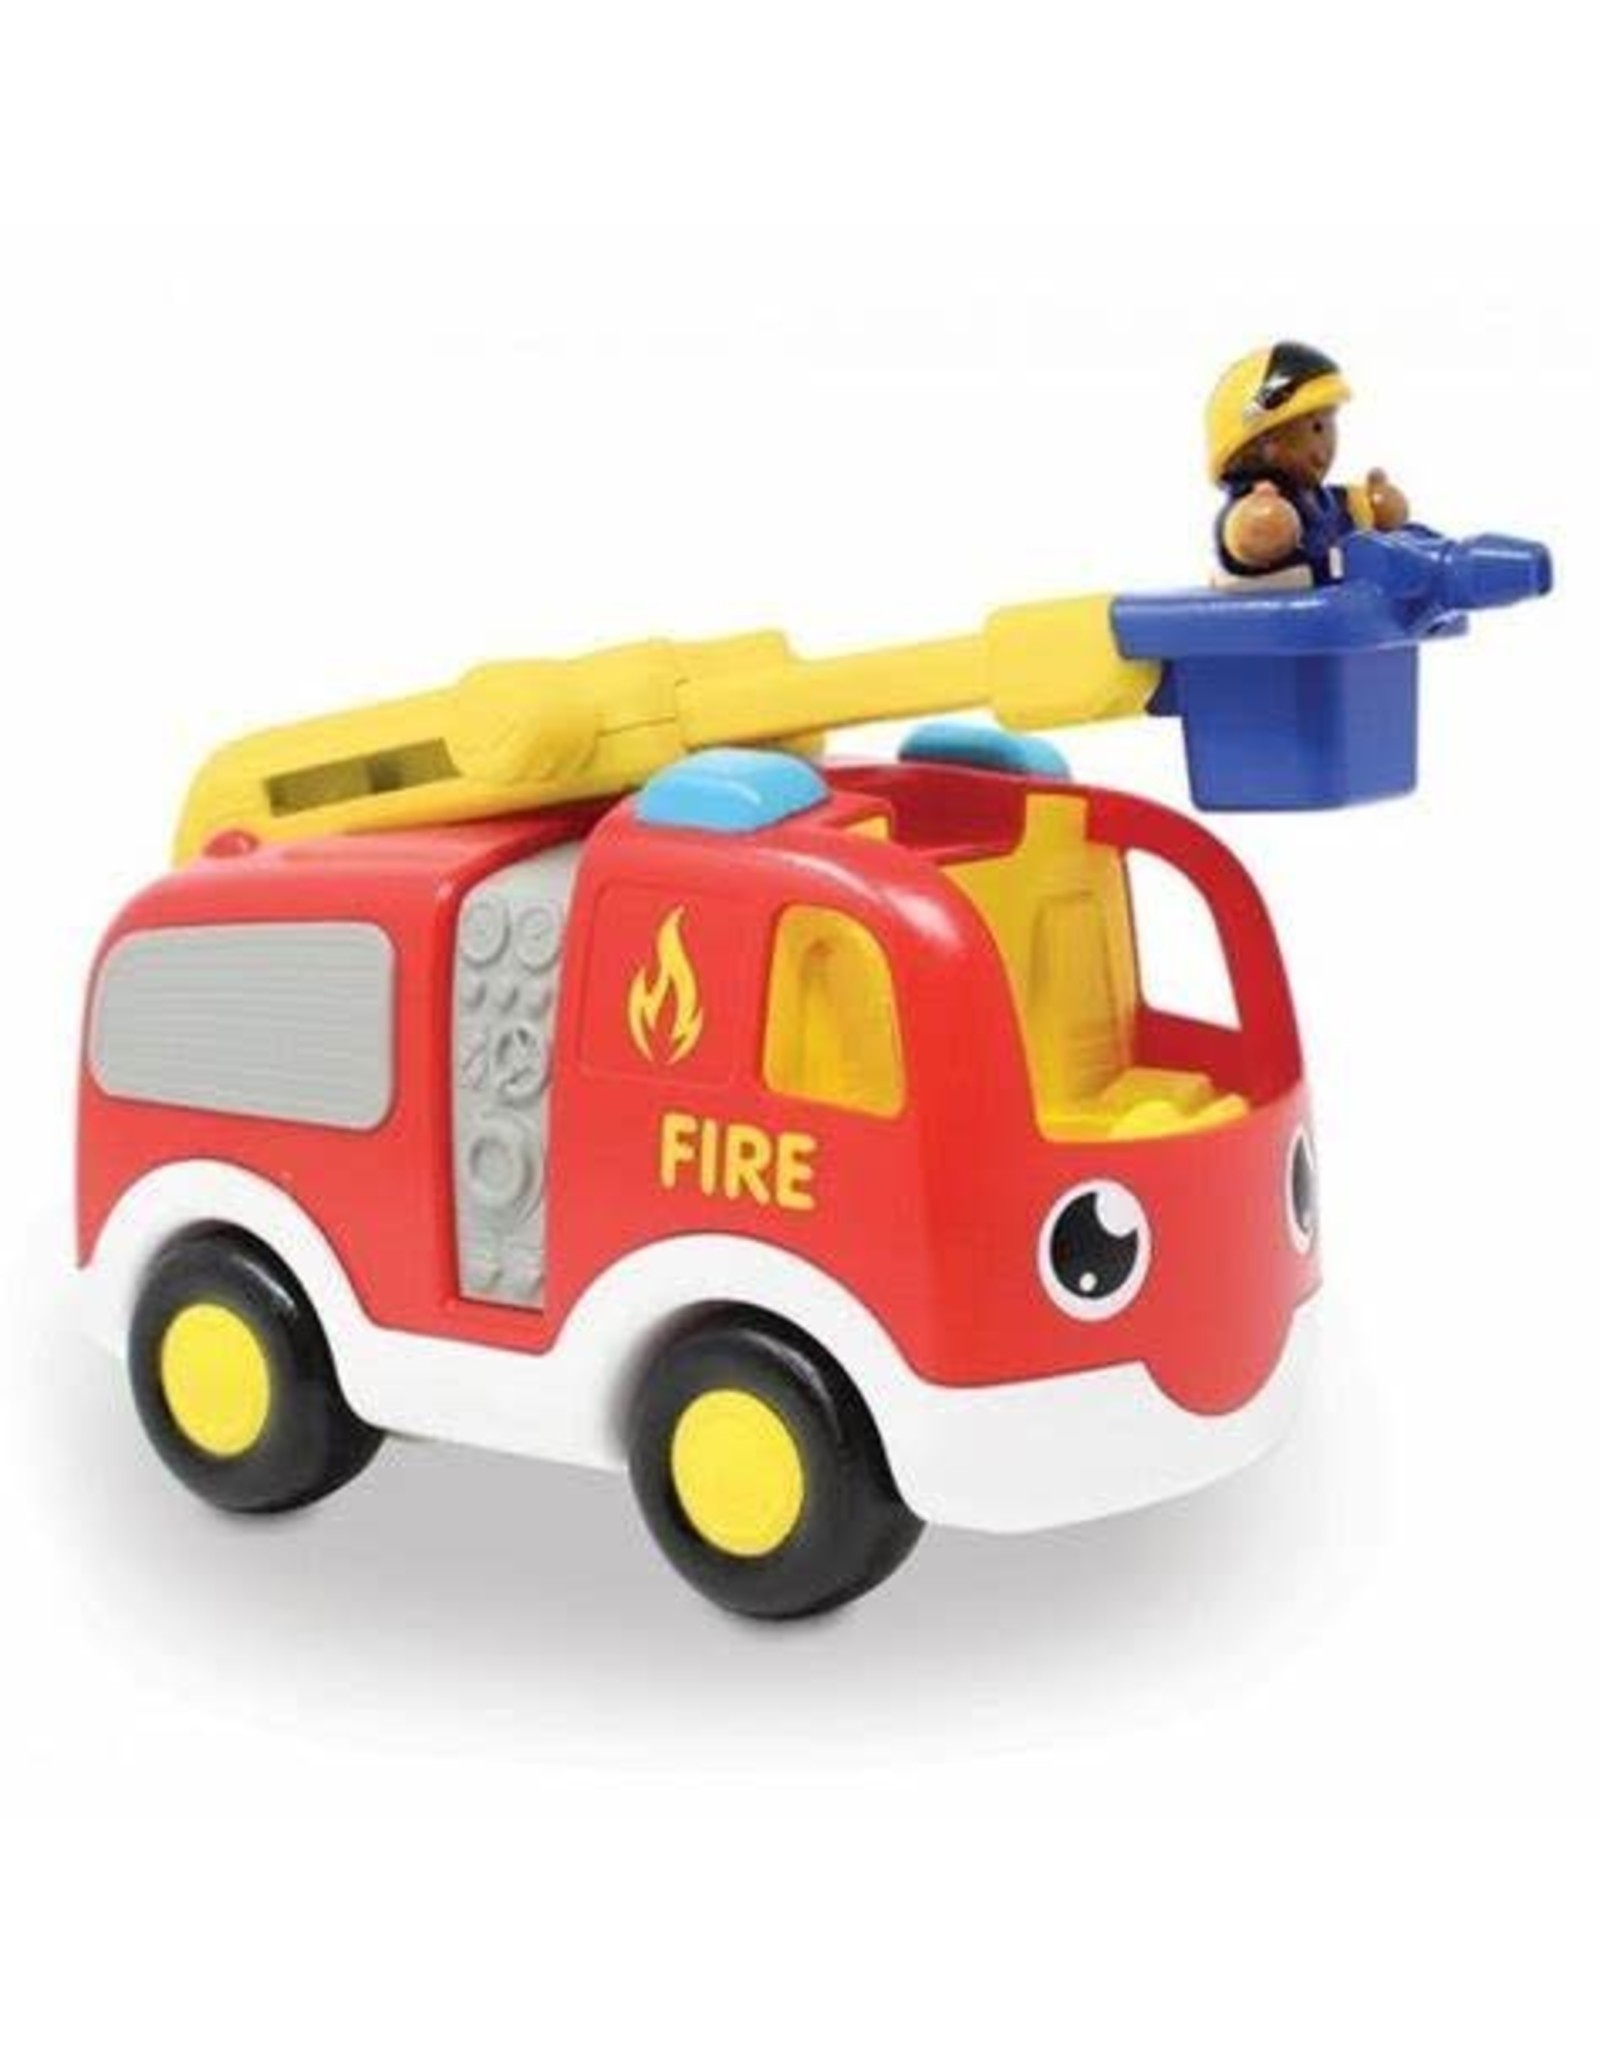 Wow Toys Ernie Fire Engine